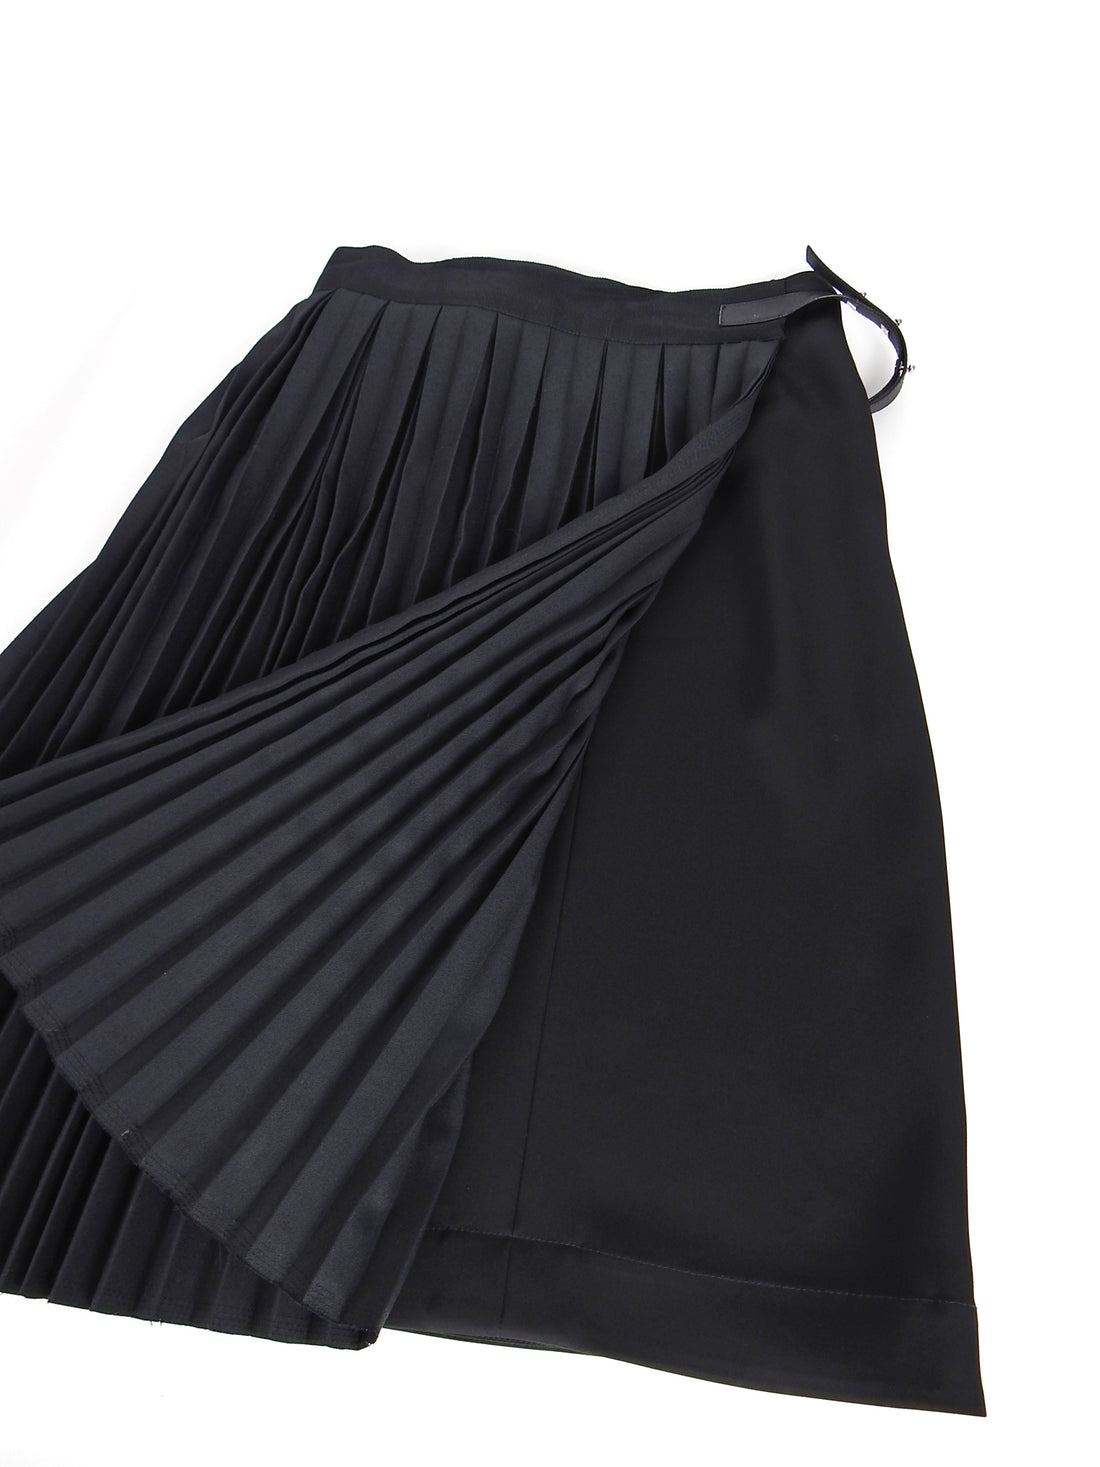 Loewe Black Pleated Skirt with Leather Belt – 44 / L / 12